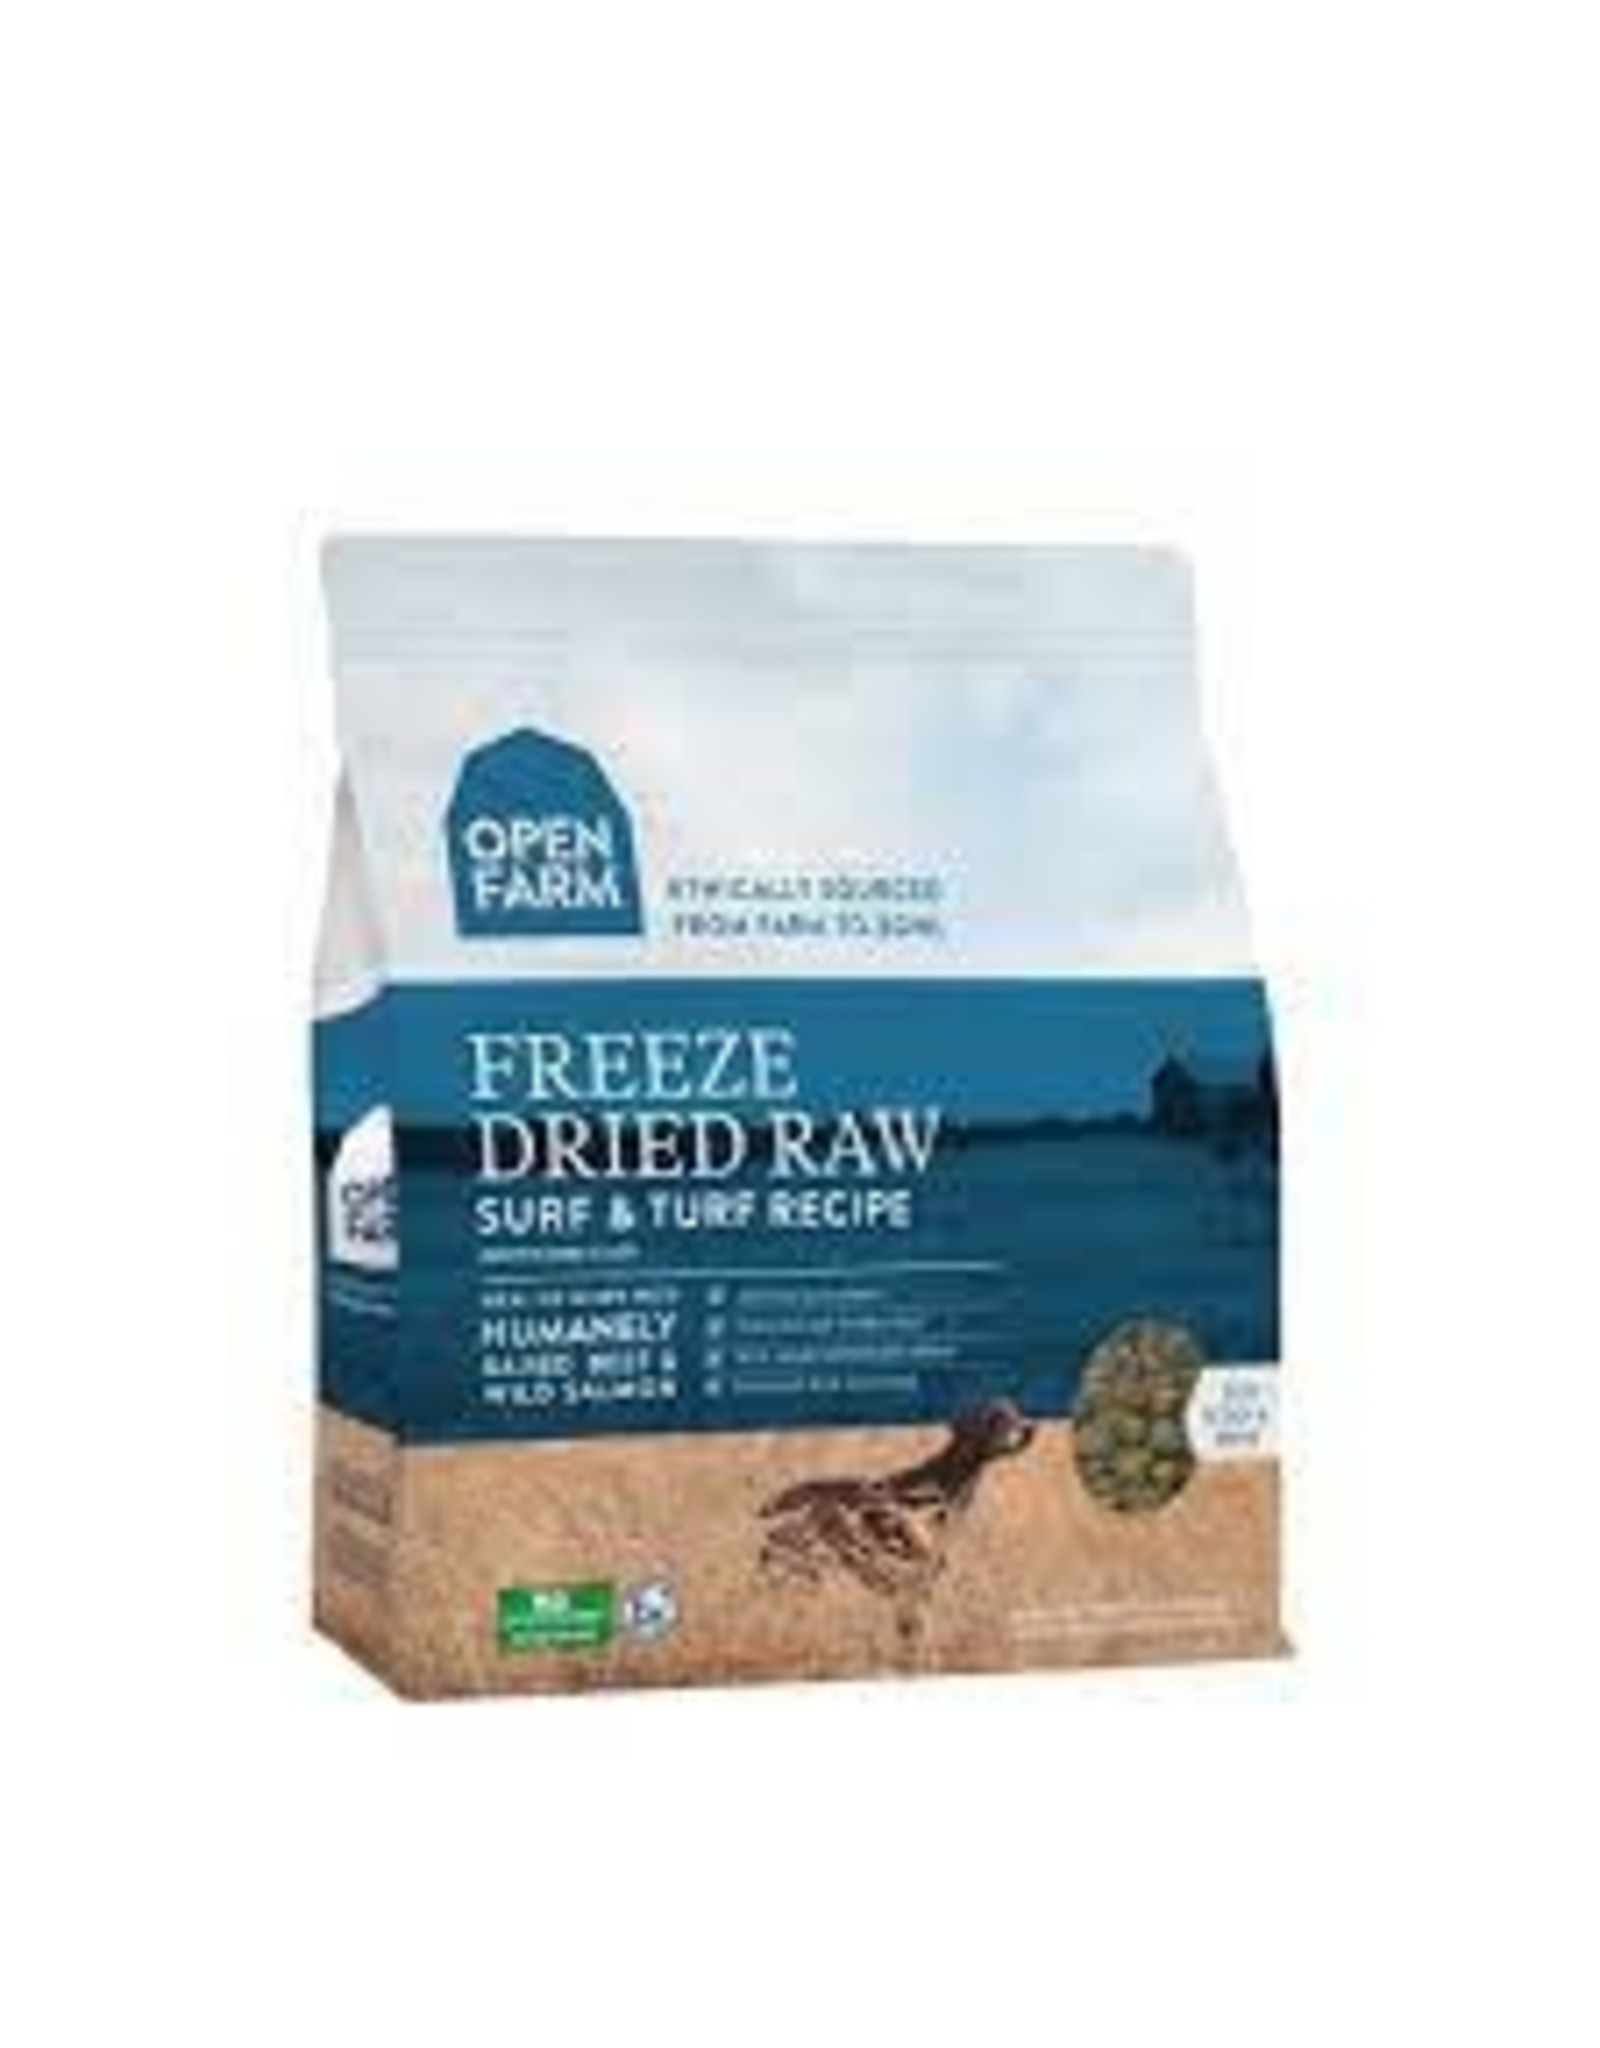 Open Farm Open Farm - Surf & Turf Freeze-Dried Raw